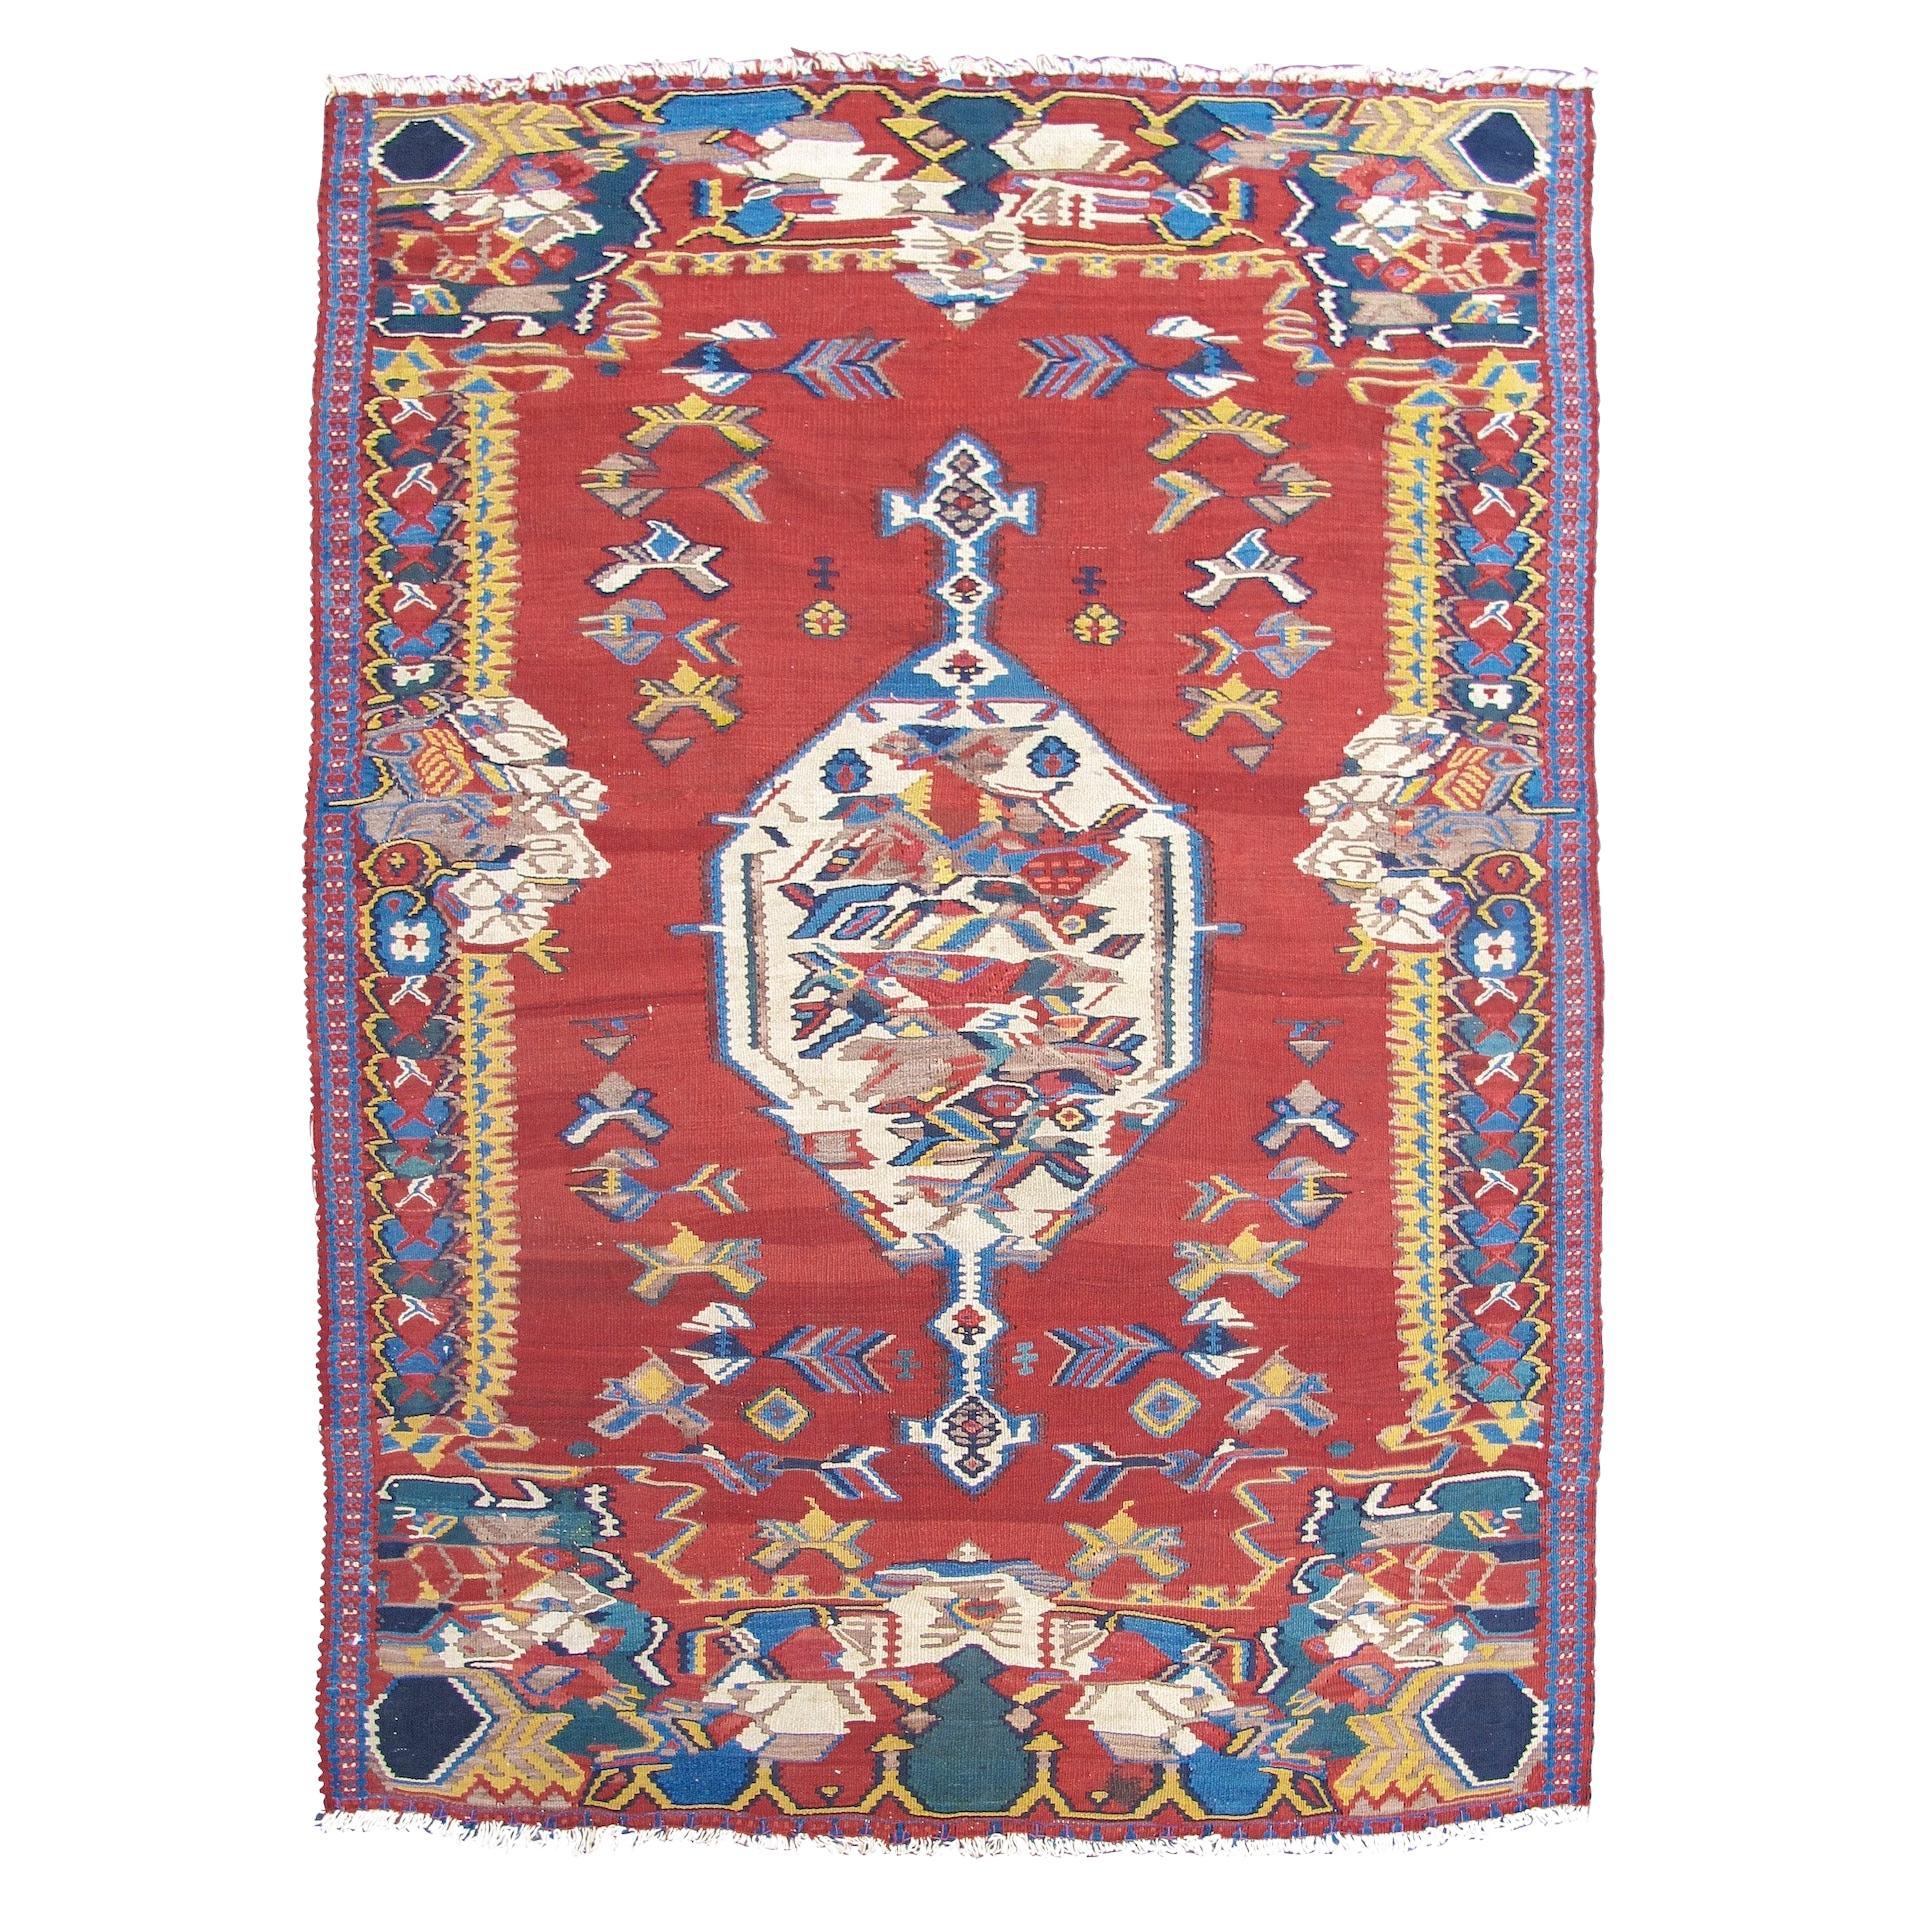 Antique Persian Bidjar Kilim Rug, c. 1900